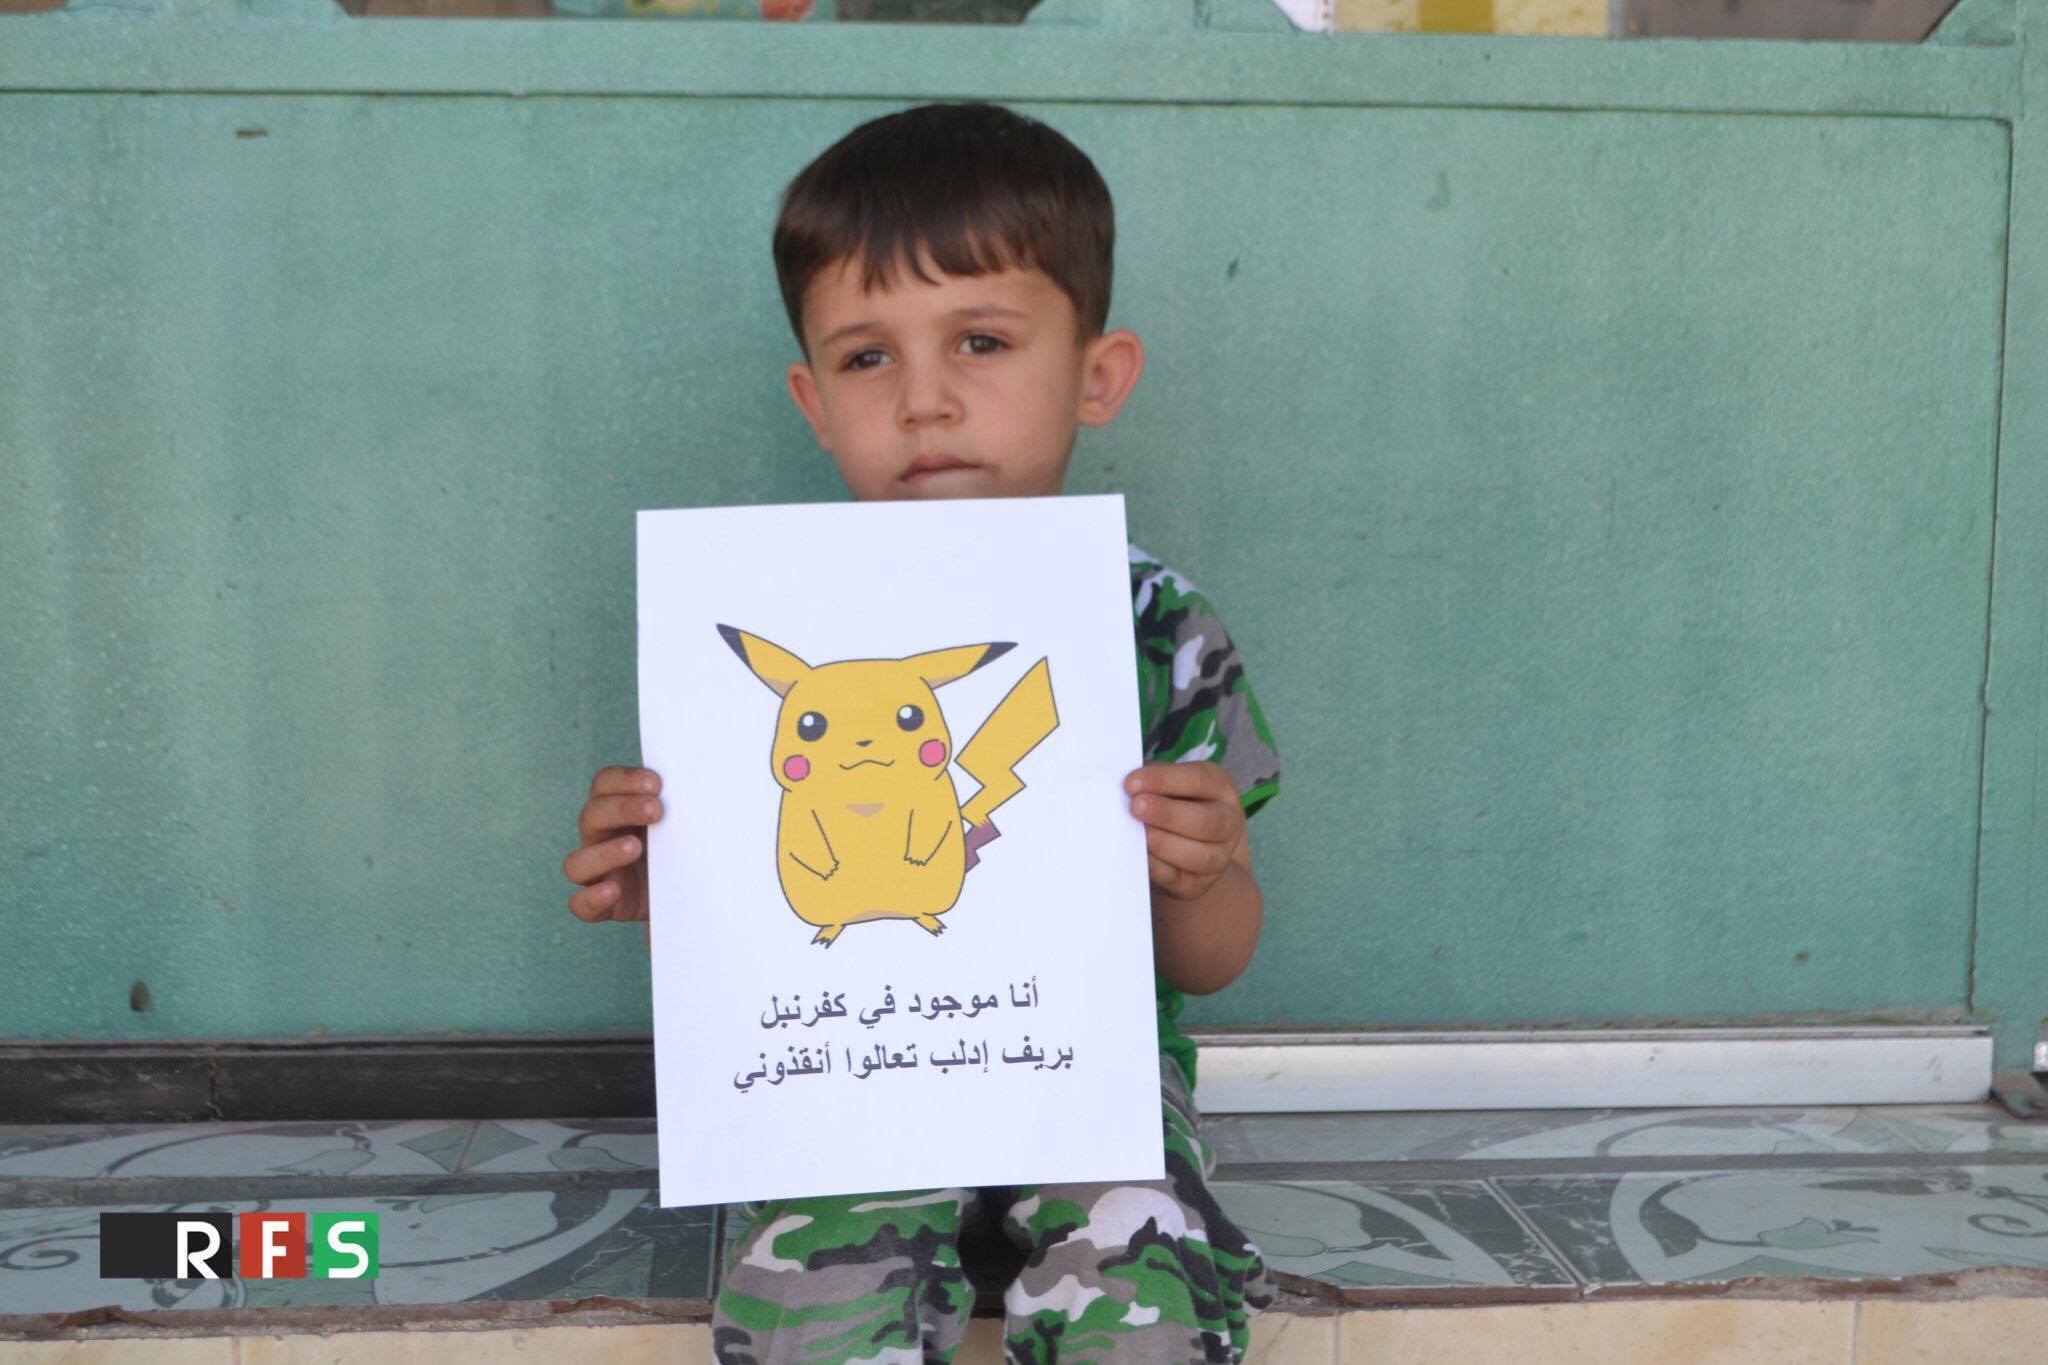 PokÃ©mon Go, appello dei bimbi siriani: xTrovateci e salvatecix